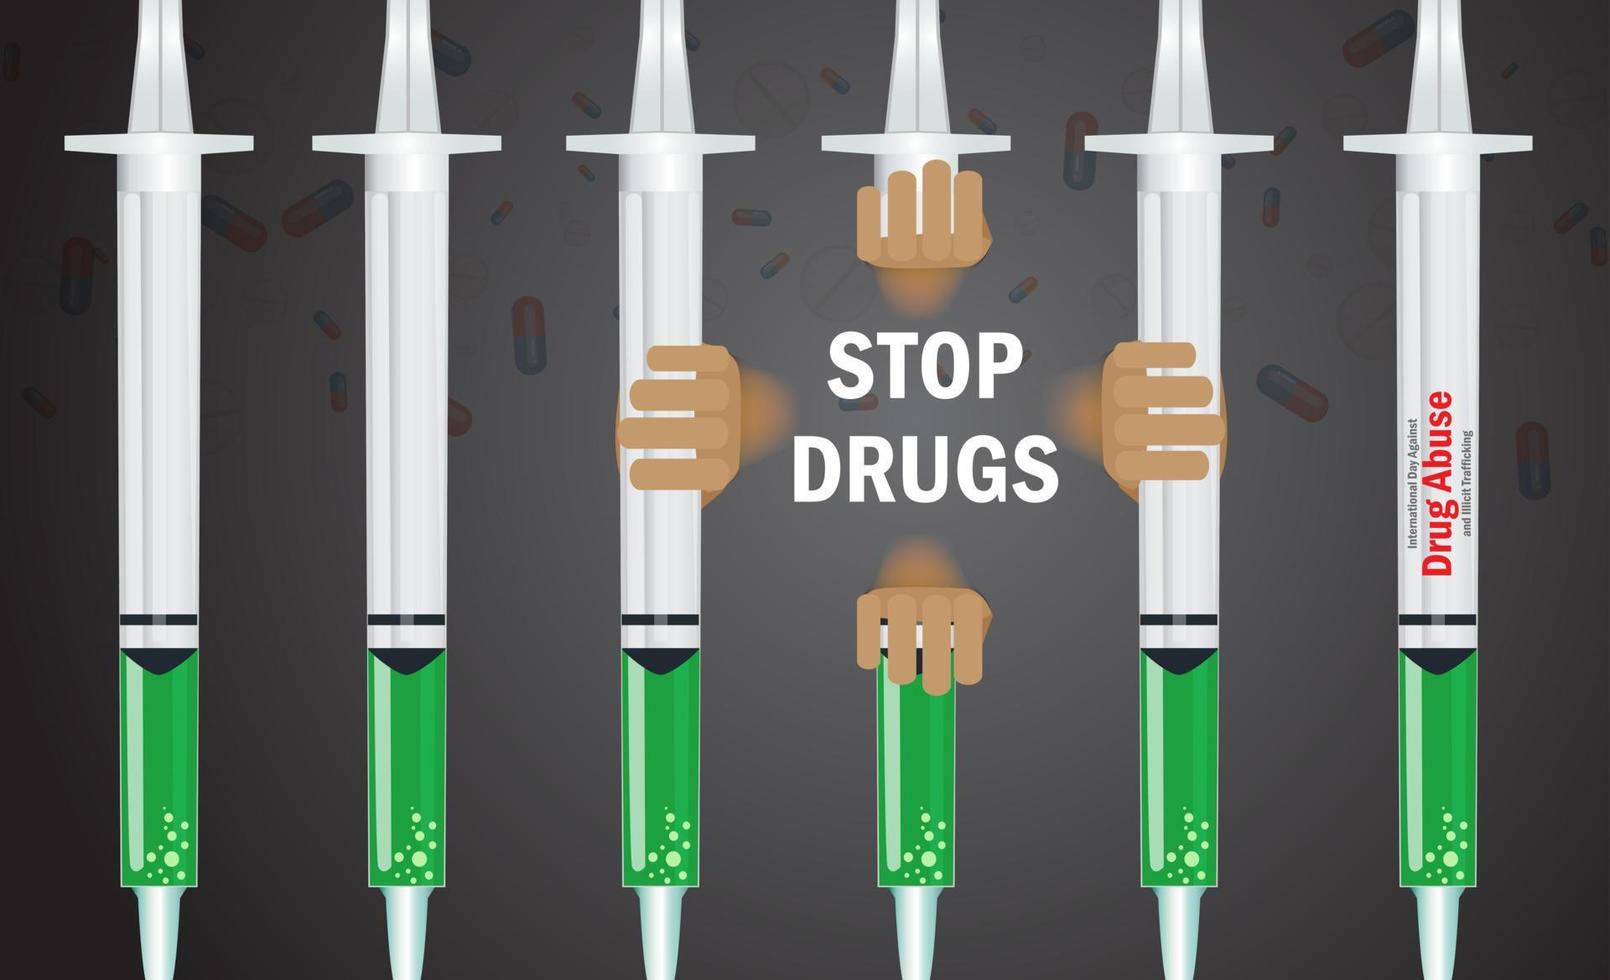 26. Juni. internationaler tag gegen drogenmissbrauch und illegalen handel banner. Vektor. vektor